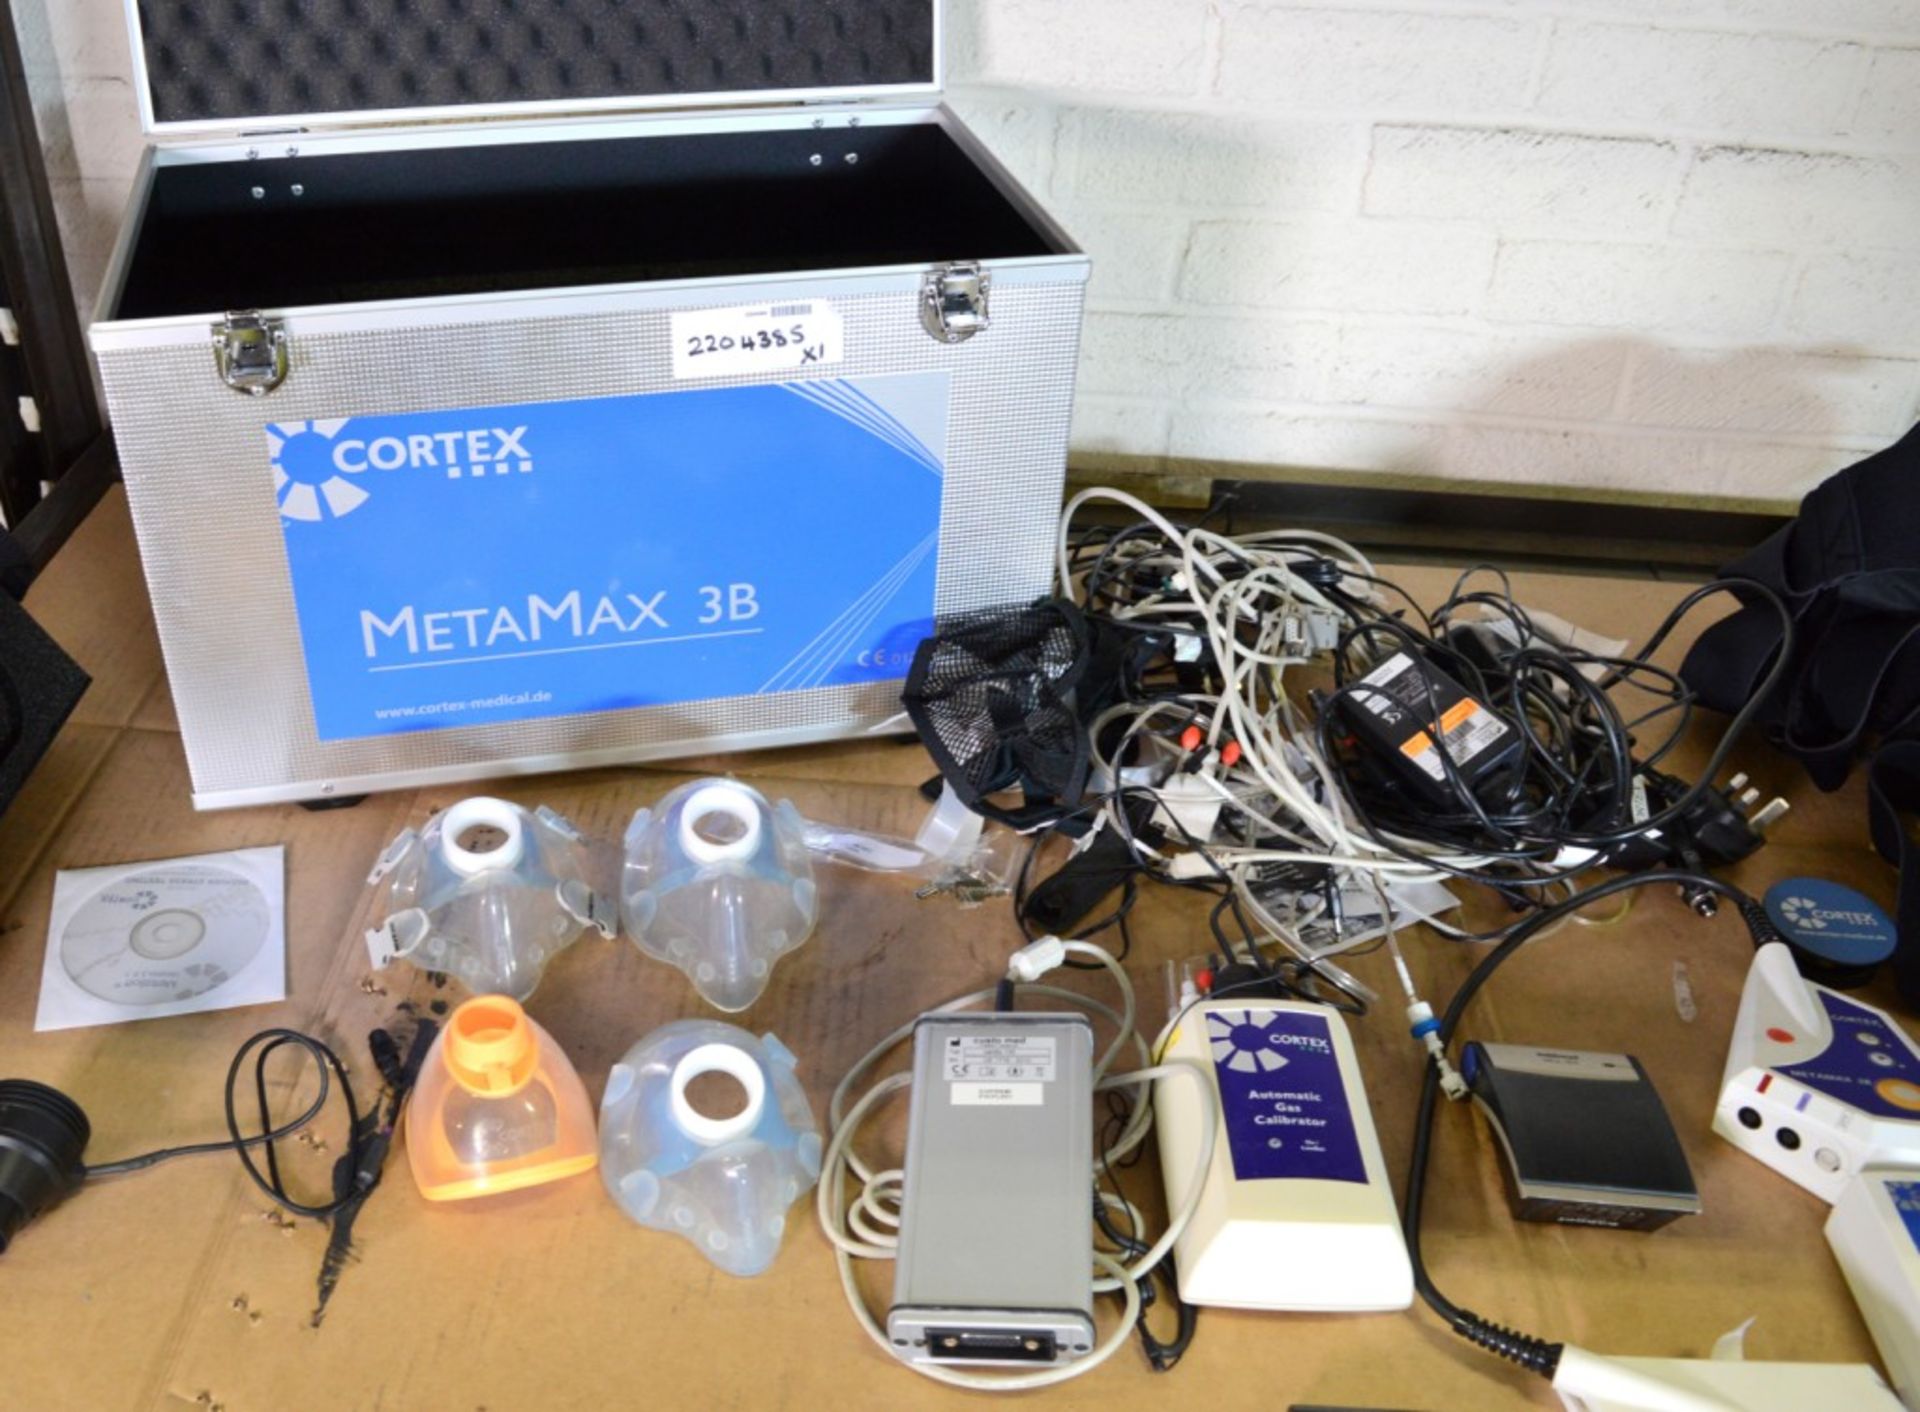 Cortex MetaMax 3B Mobile Spiroergometry Device. - Image 2 of 3